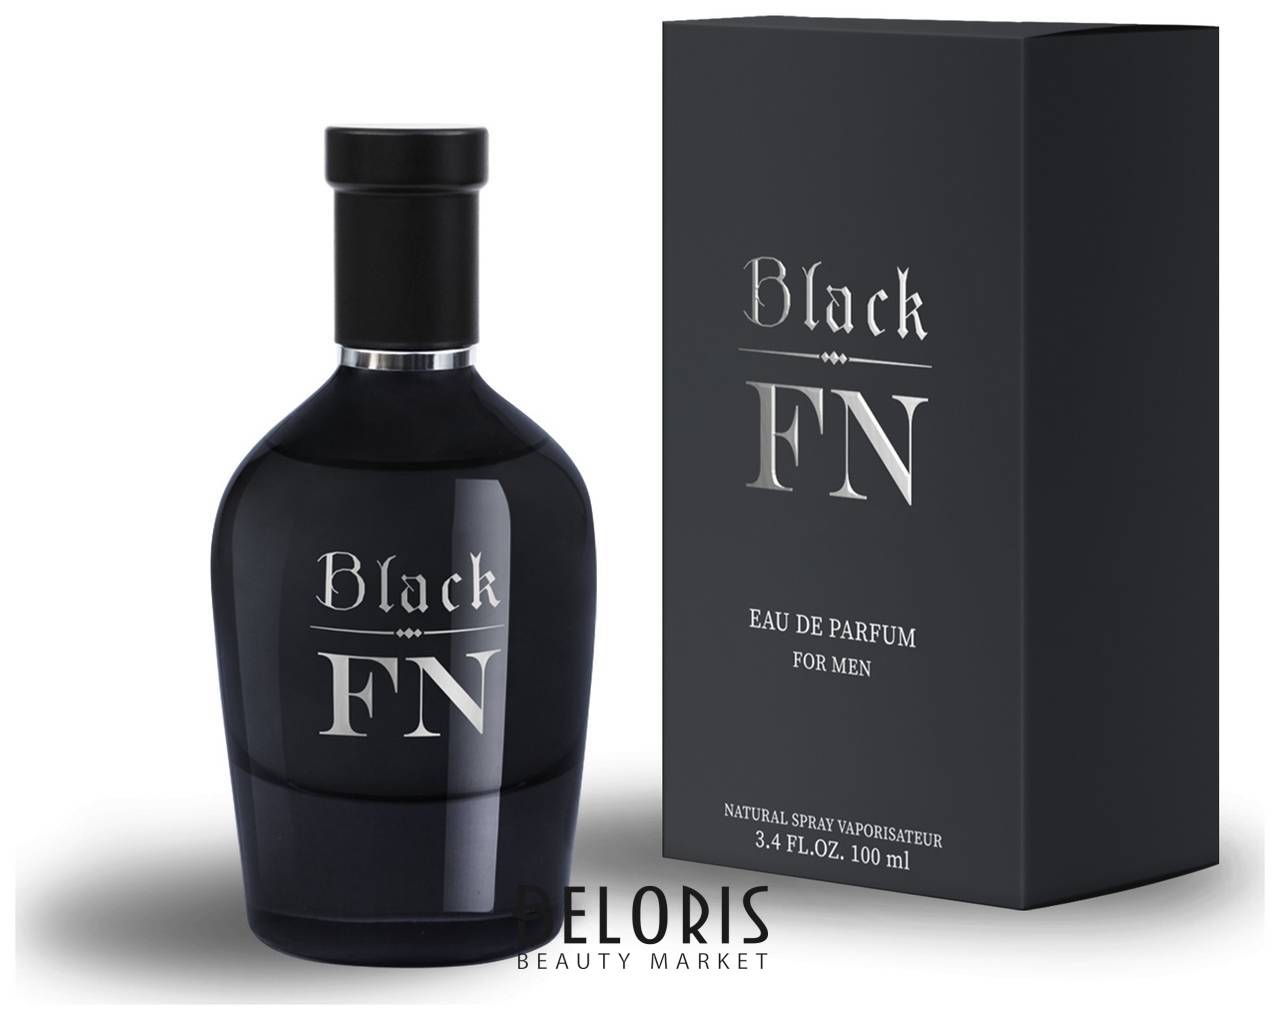 Парфюмерная вода для мужчин Black FN Flavio Neri